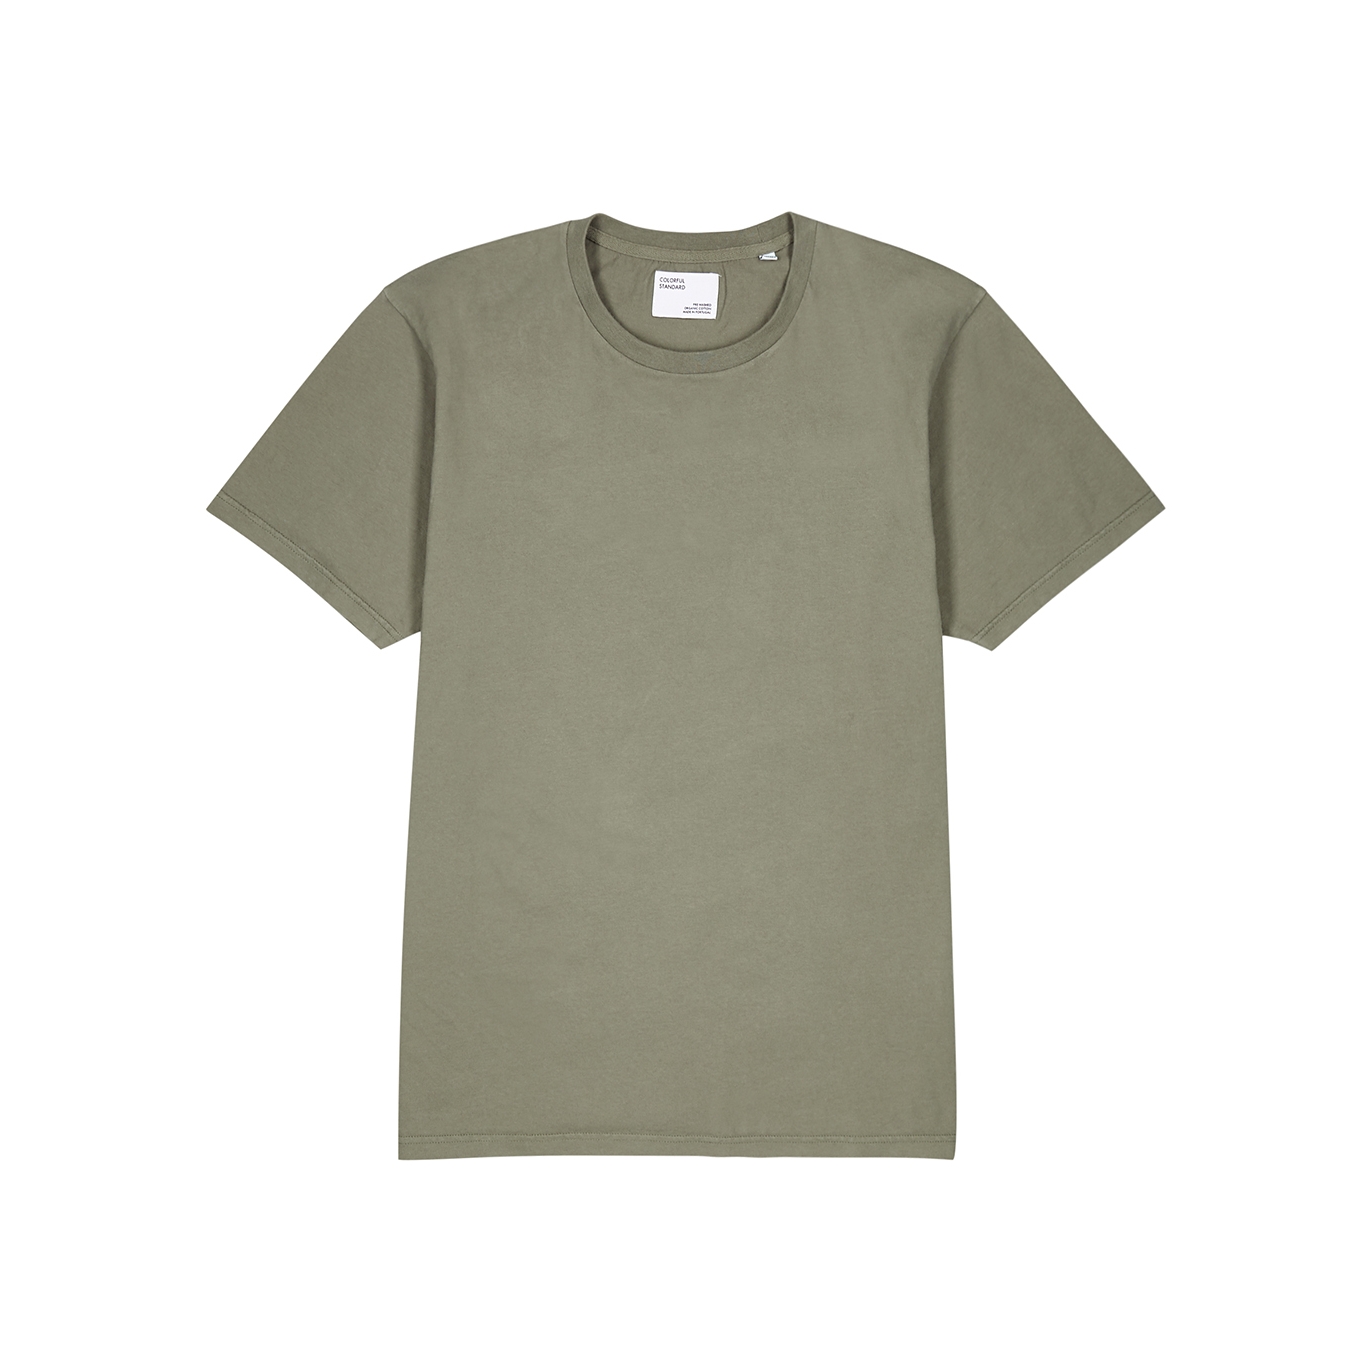 COLORFUL STANDARD Army green cotton T-shirt - Harvey Nichols